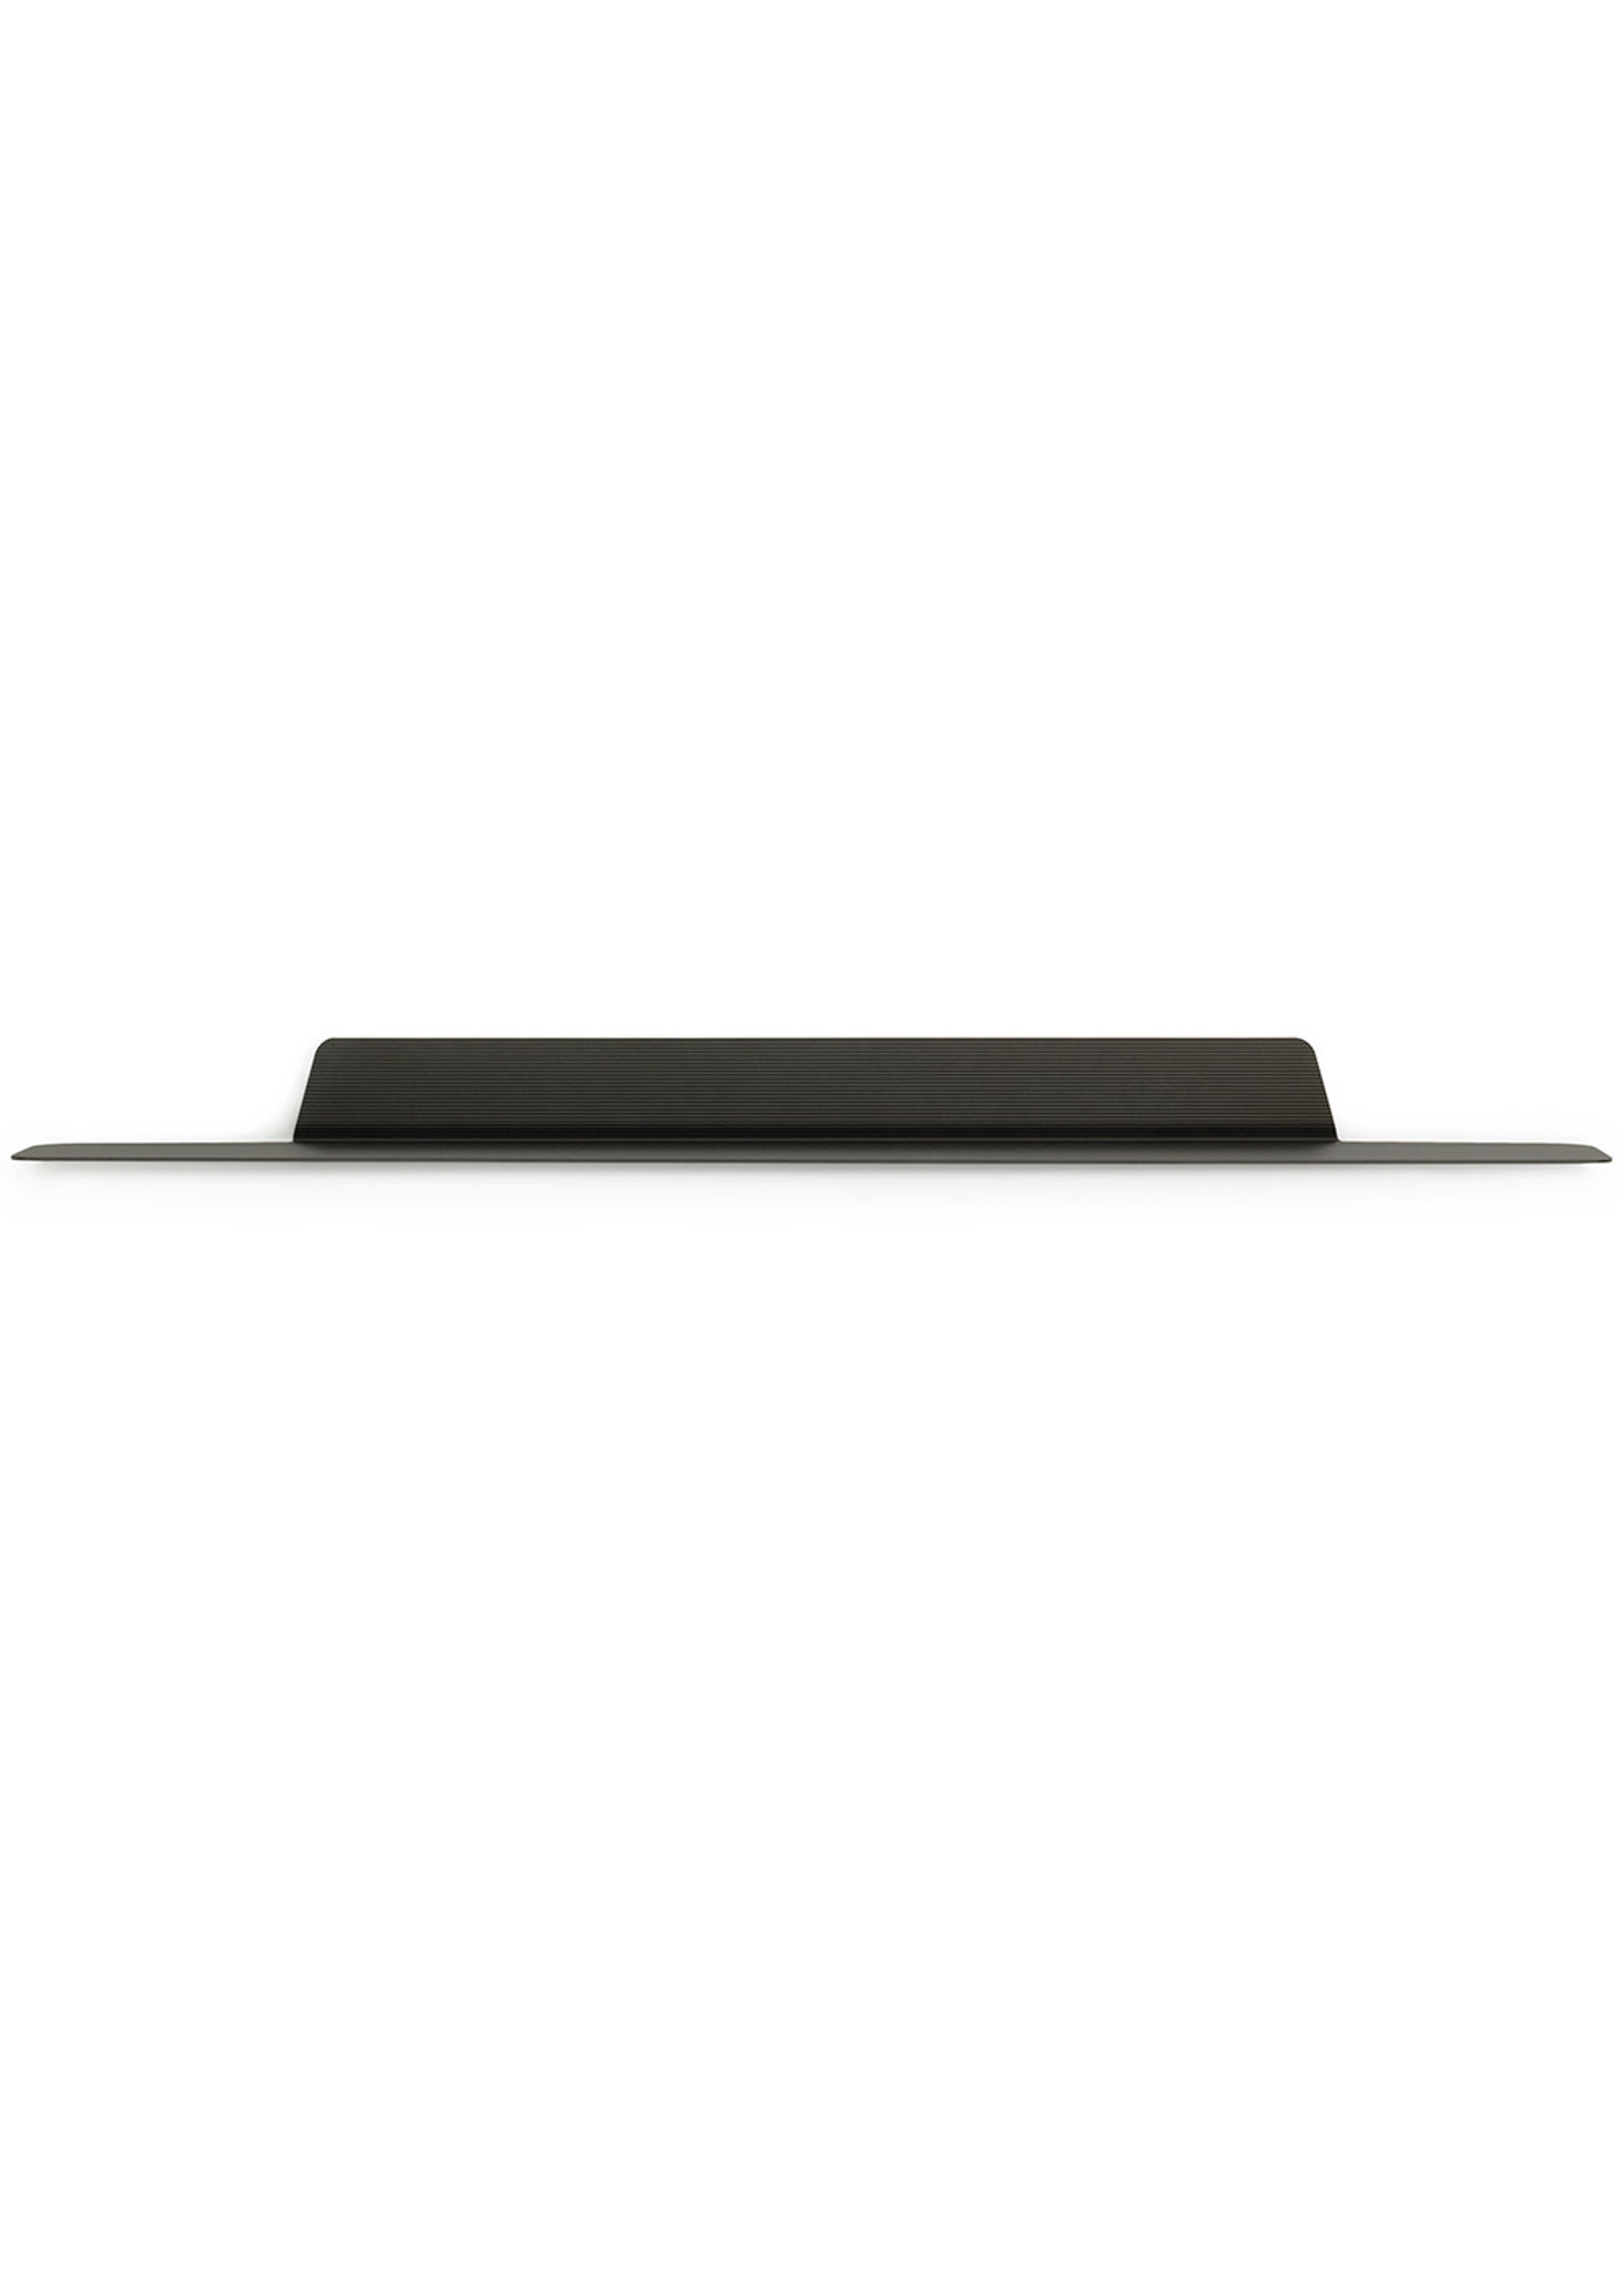 Normann Copenhagen - Prateleira - Jet shelf - Black - 160 cm